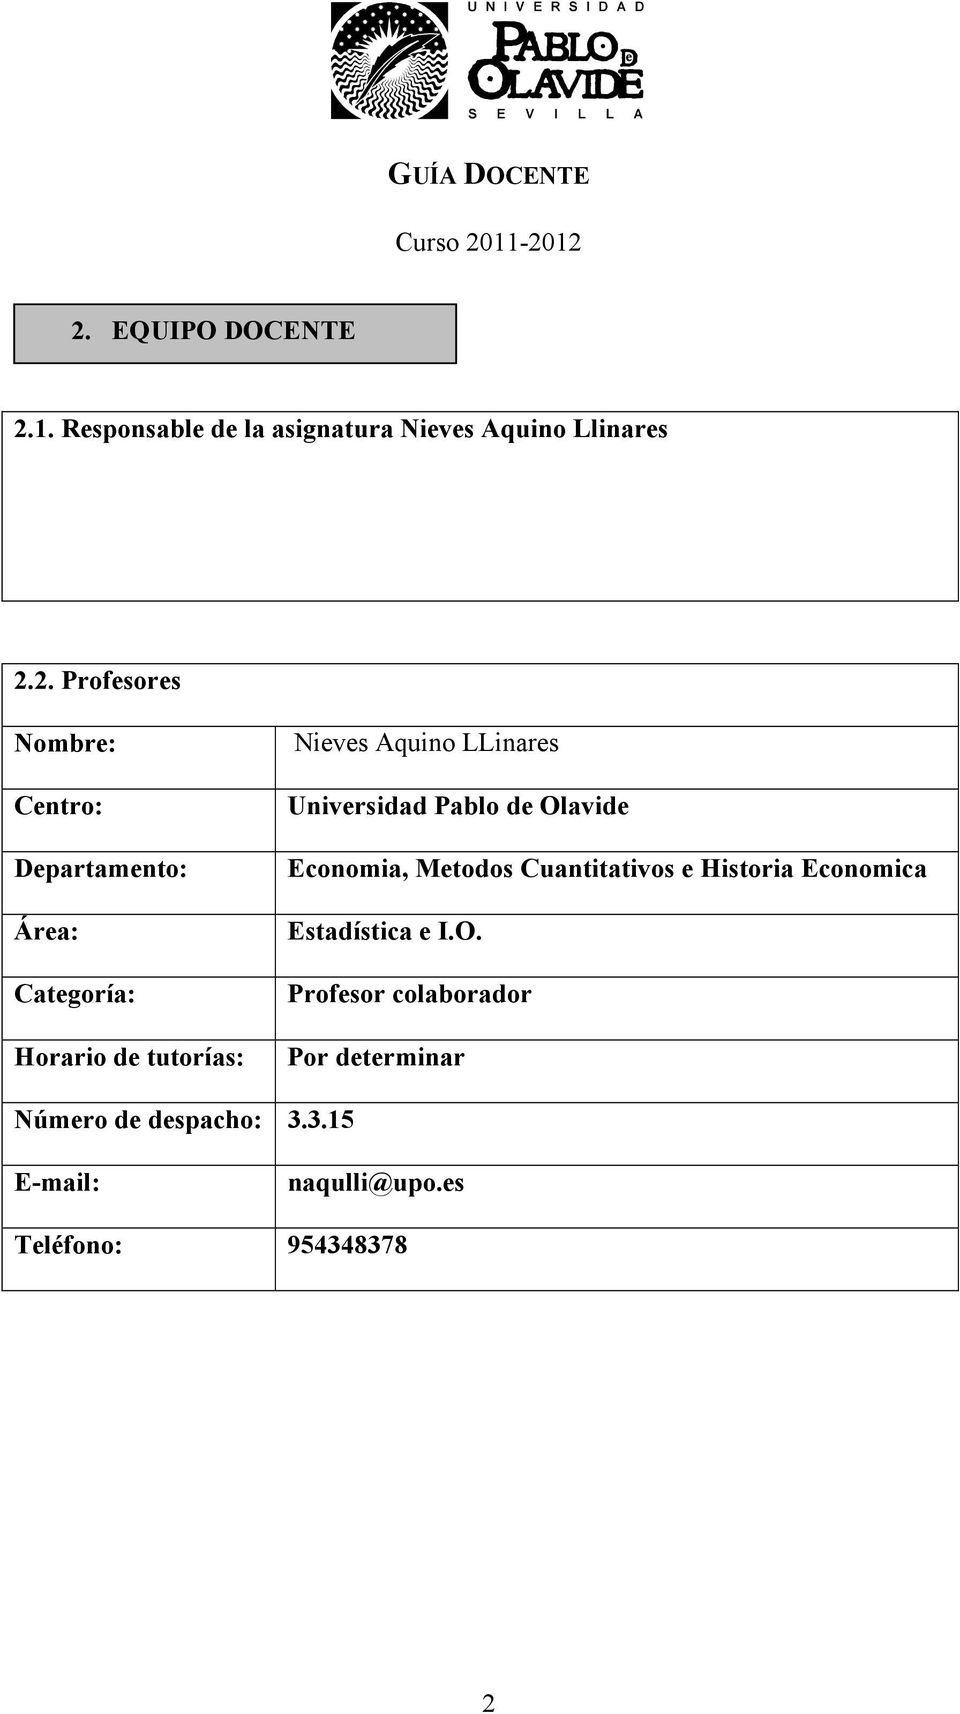 Universidad Pablo de Olavide Economia, Metodos Cuantitativos e Historia Economica Estadística e I.